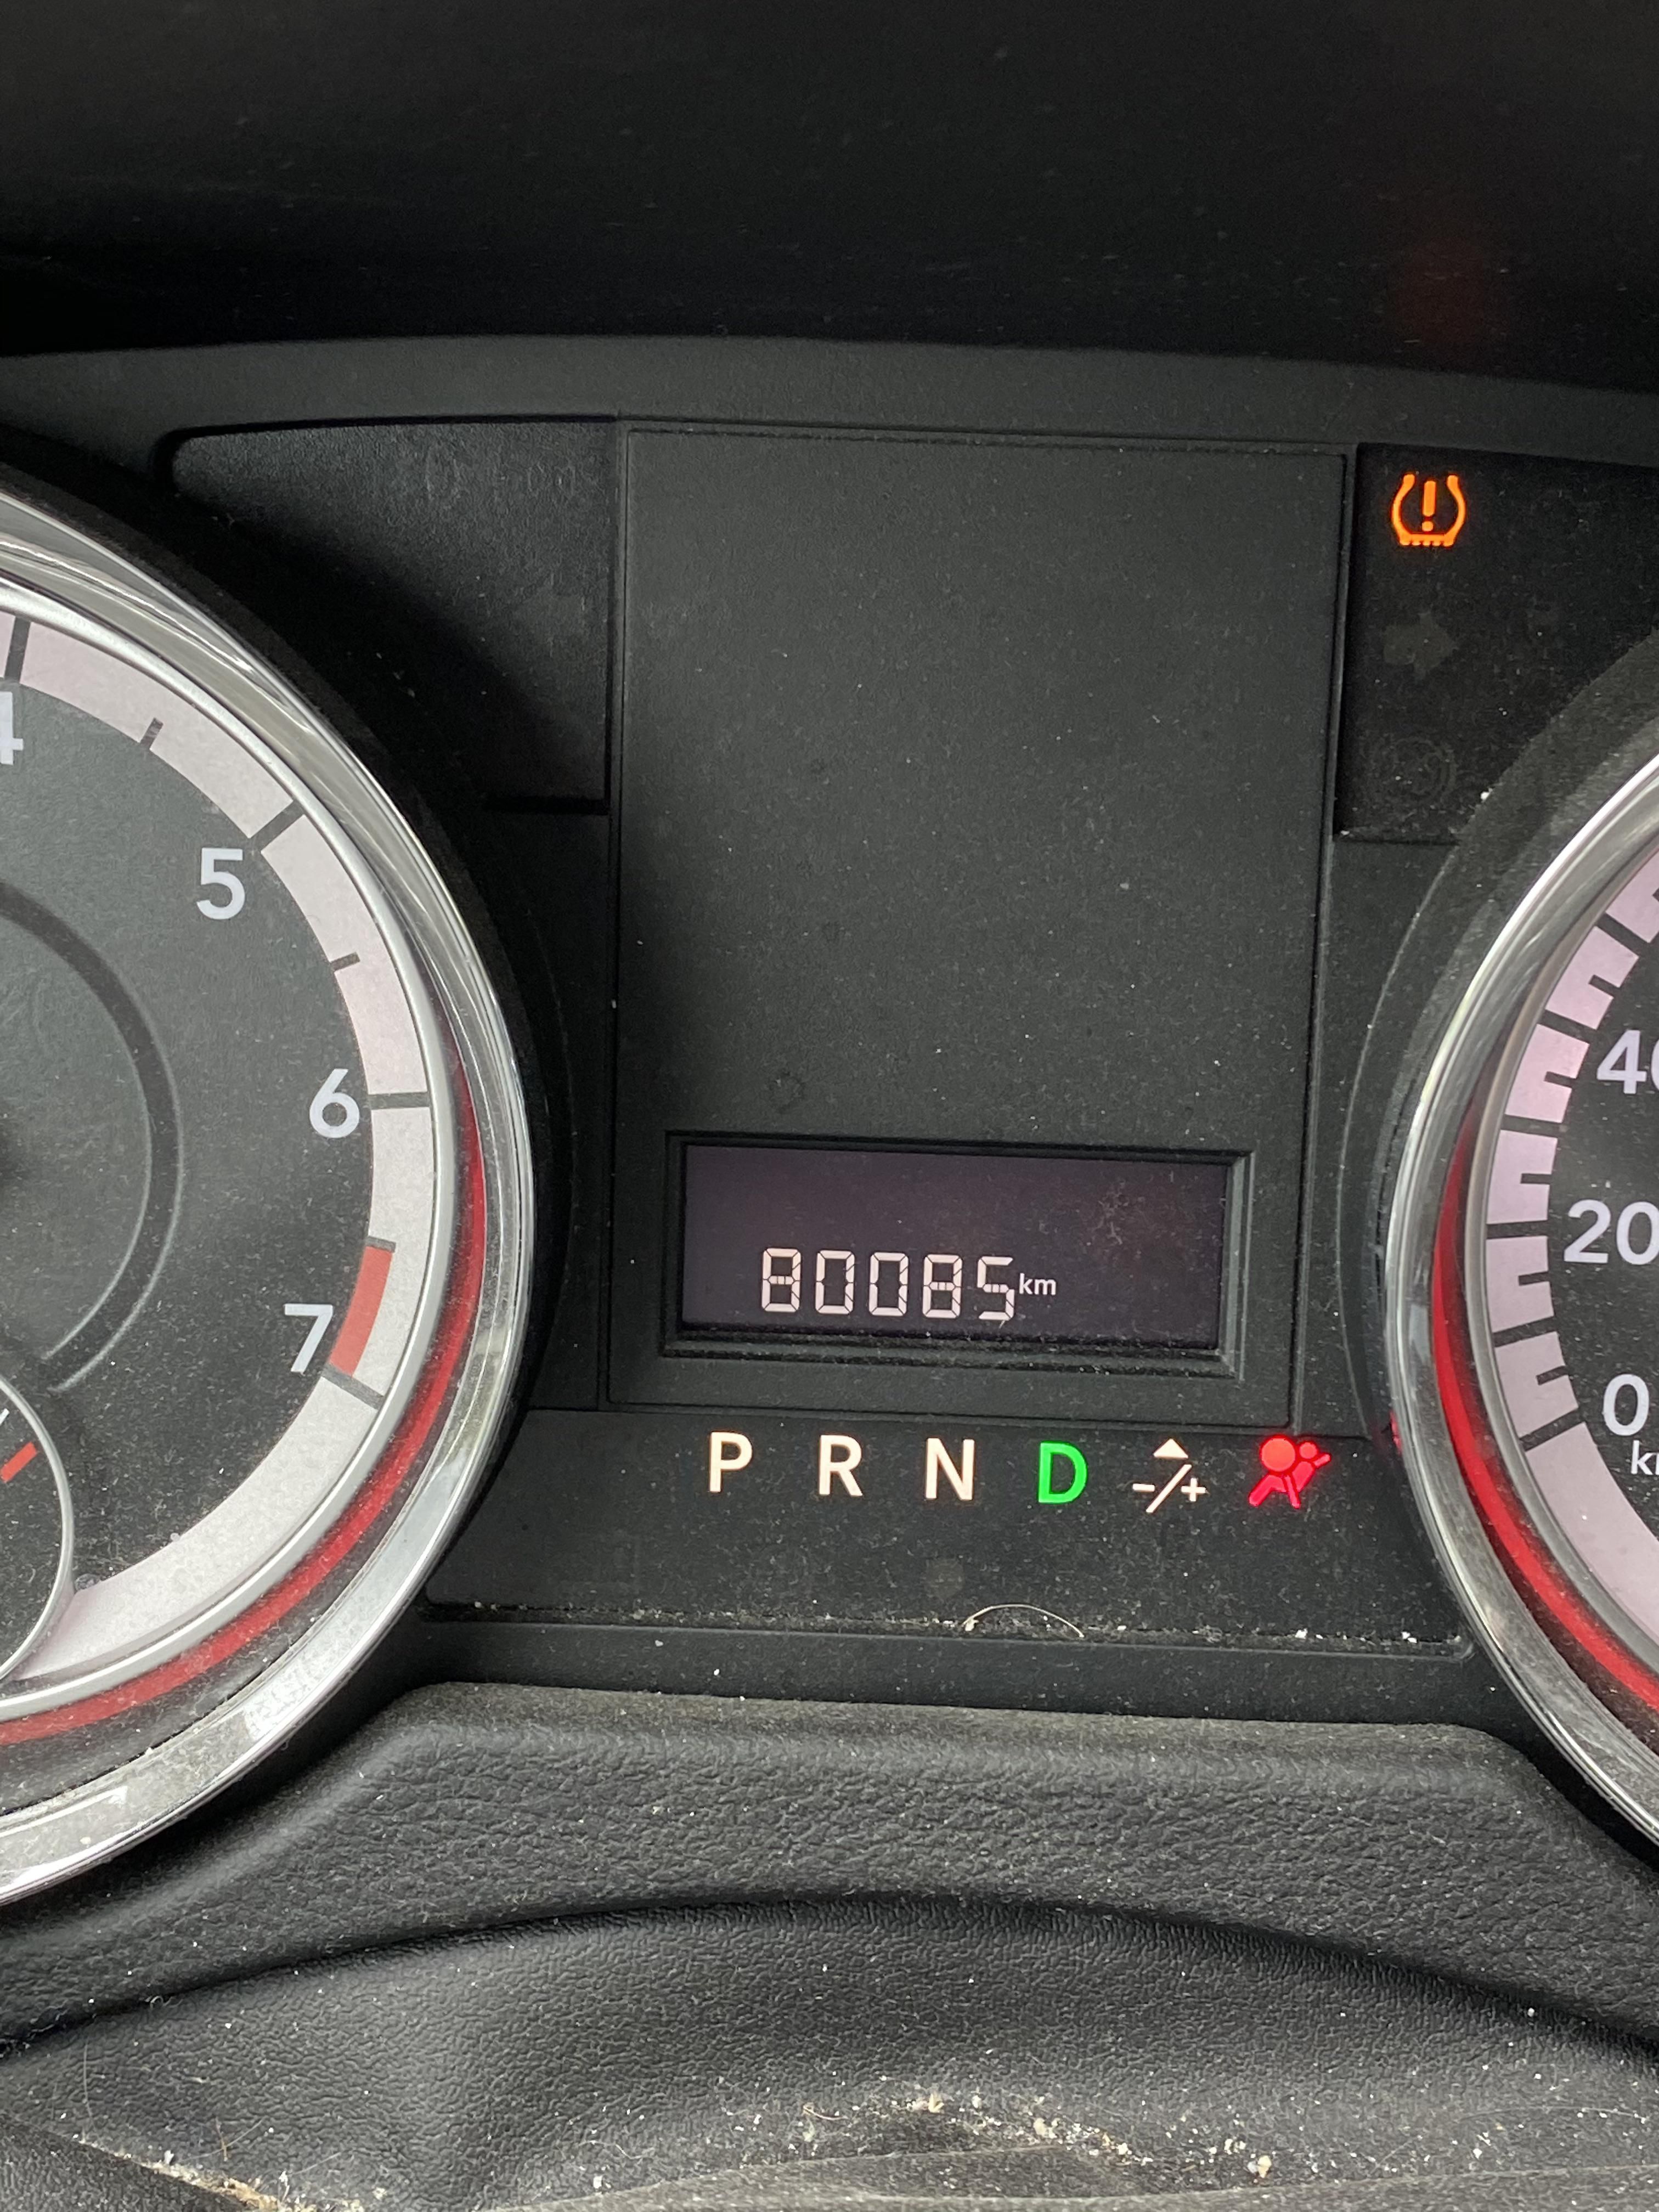 My car reached a milestone.